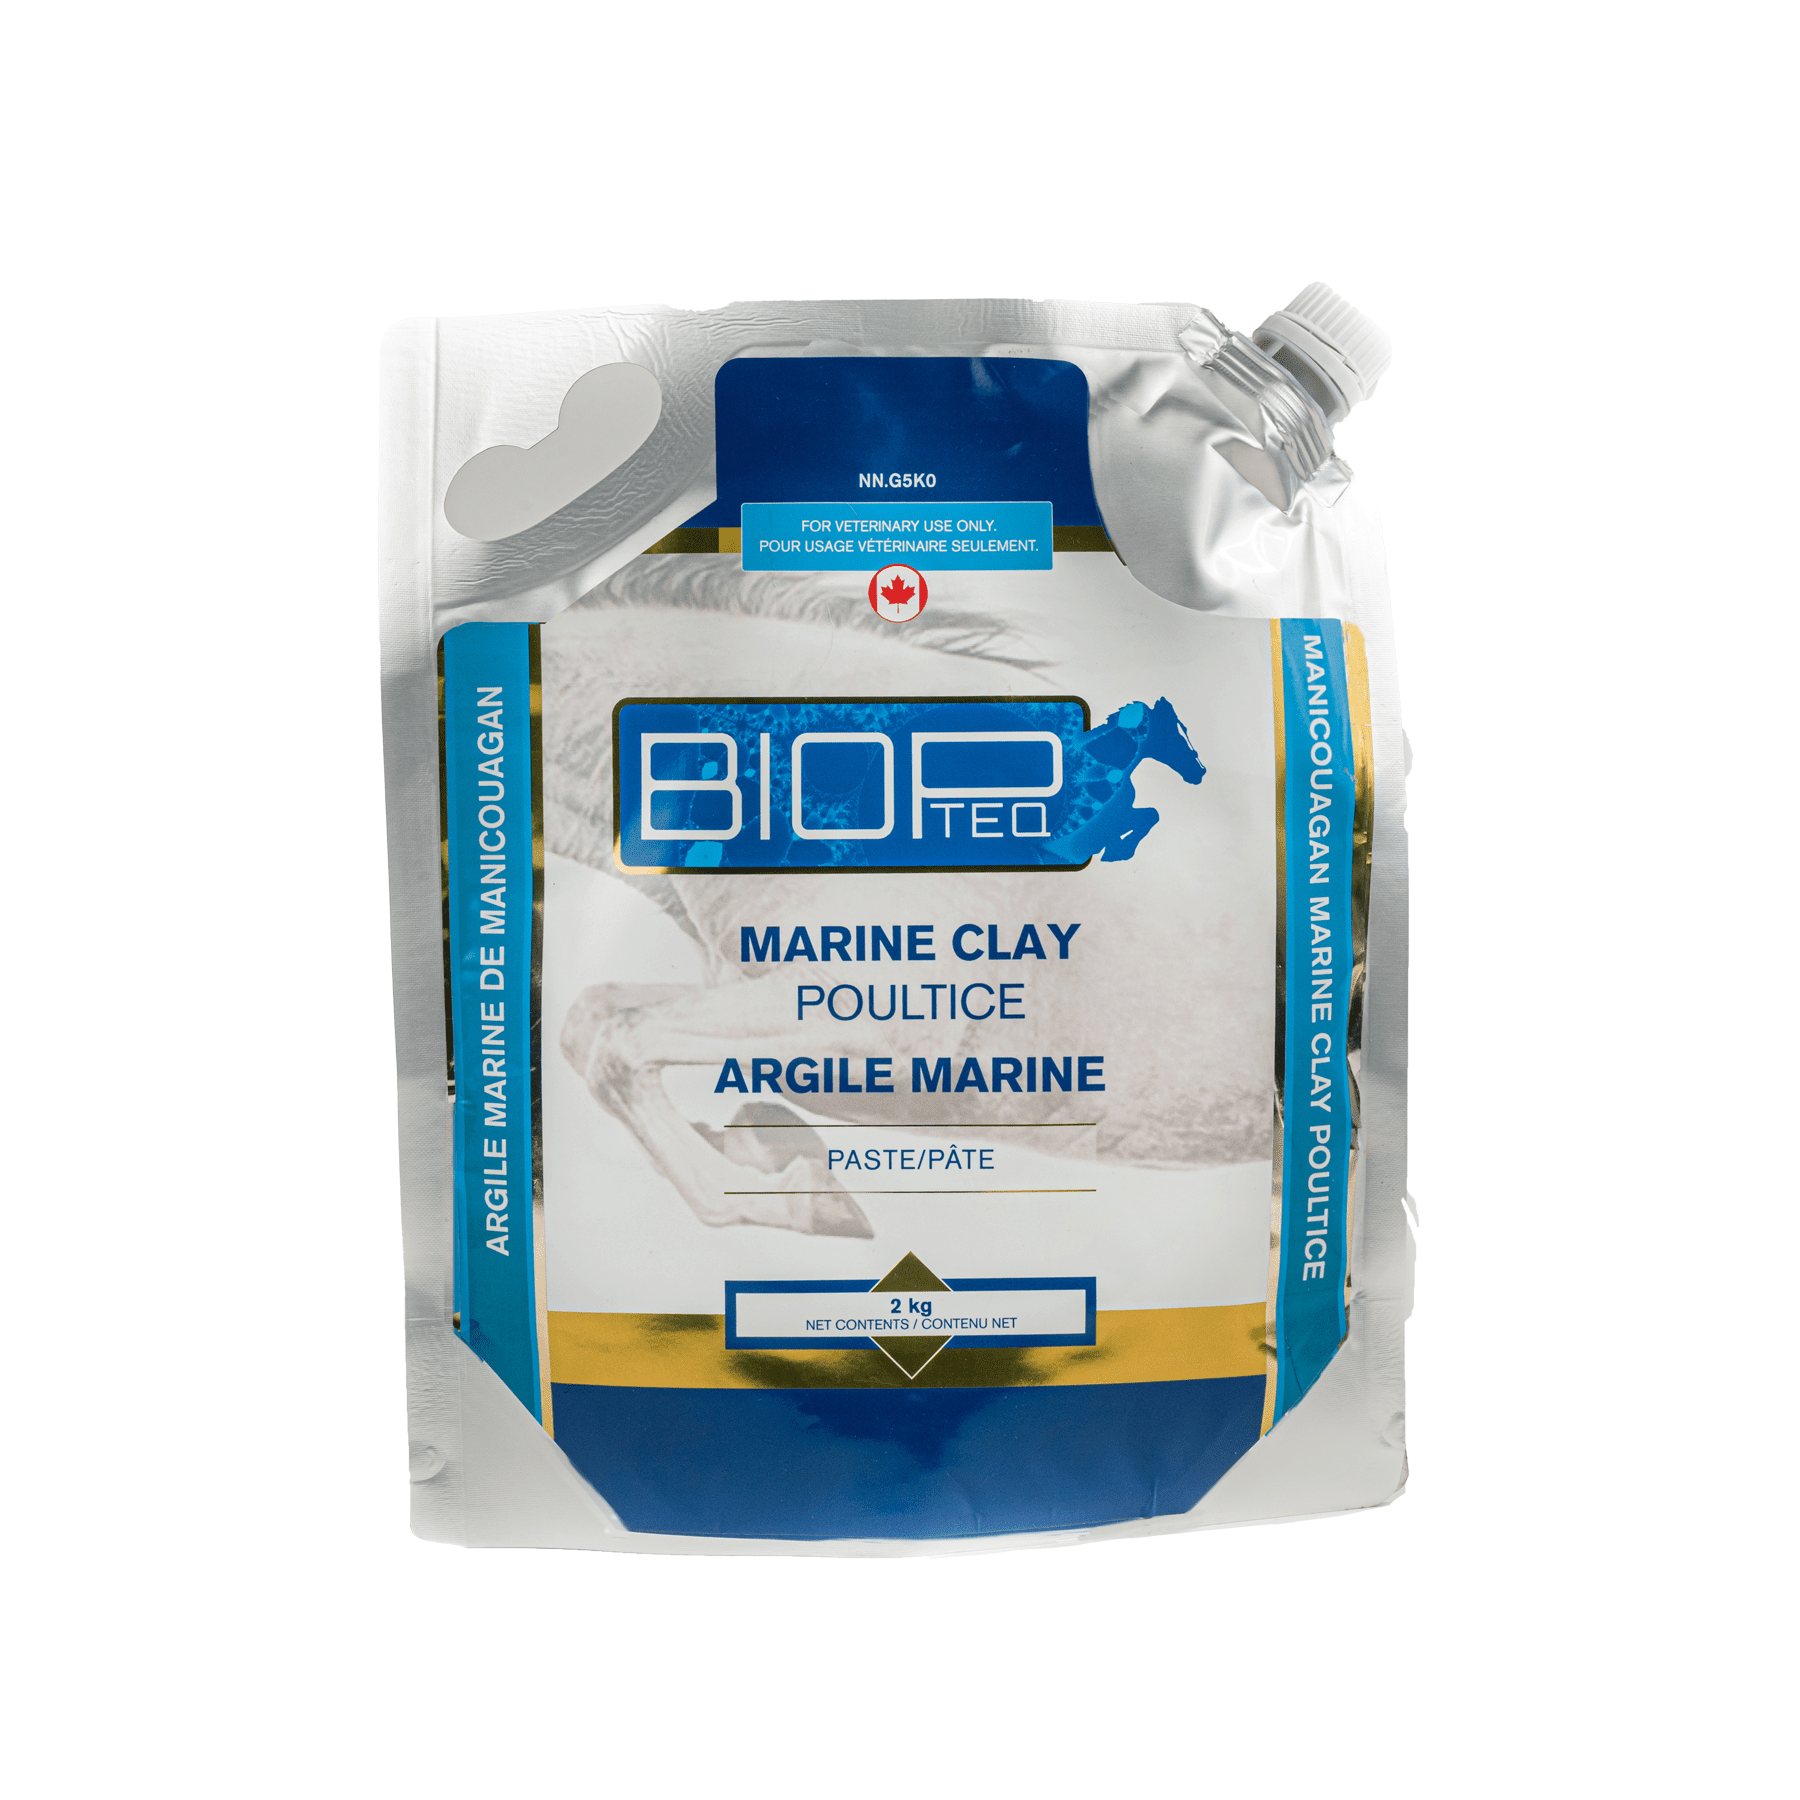 Poultice d'argile marine Biopteq - 2 kg